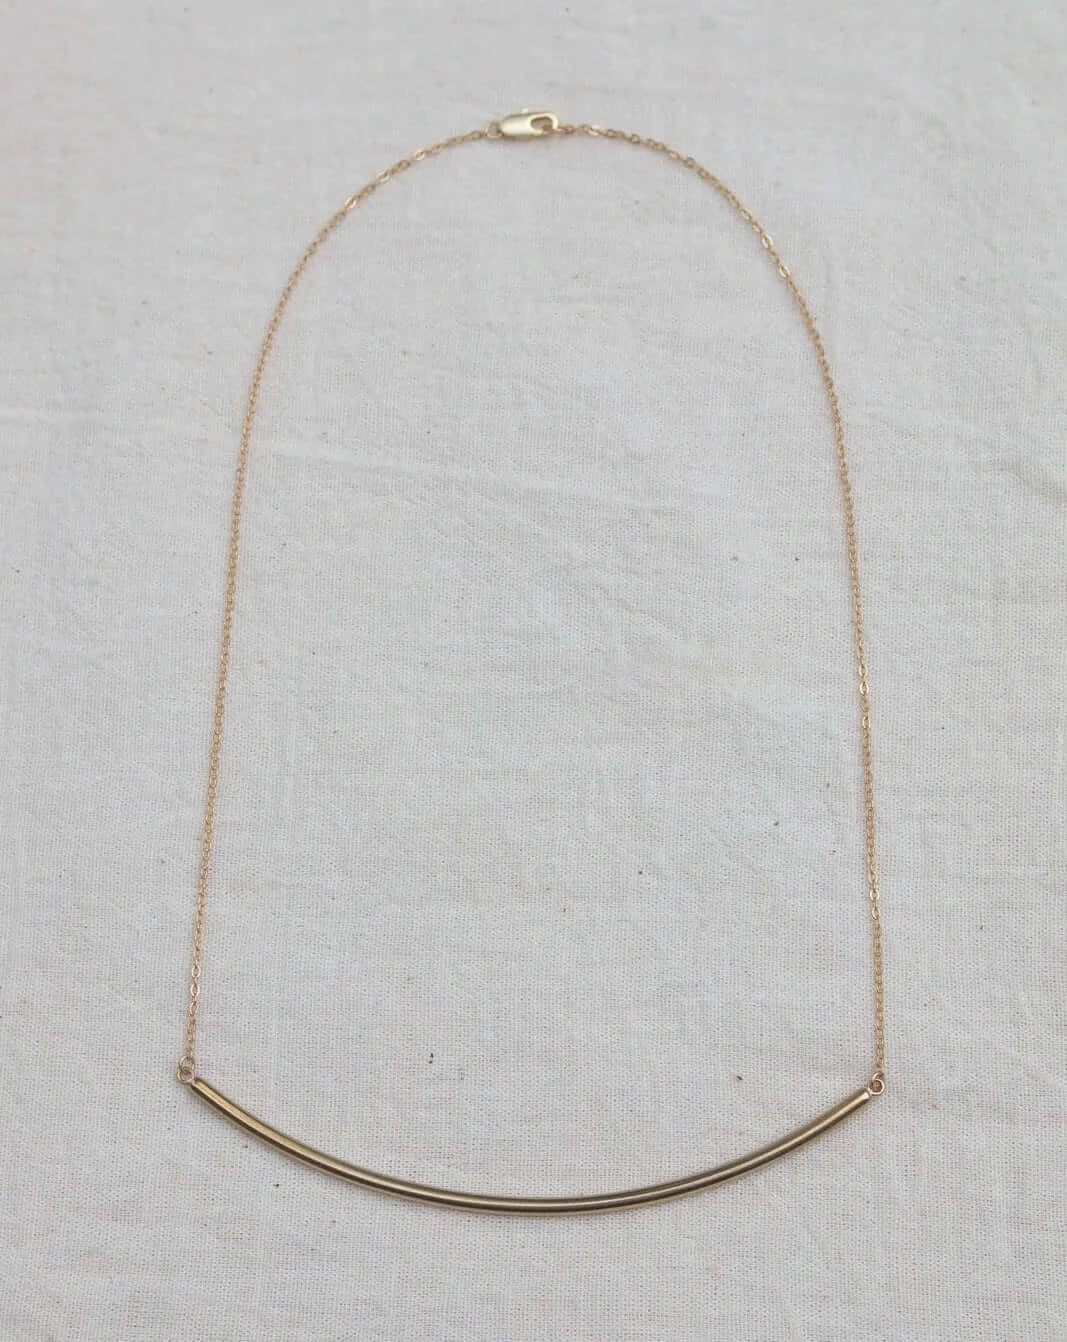 Sitima Brass Necklace on white background